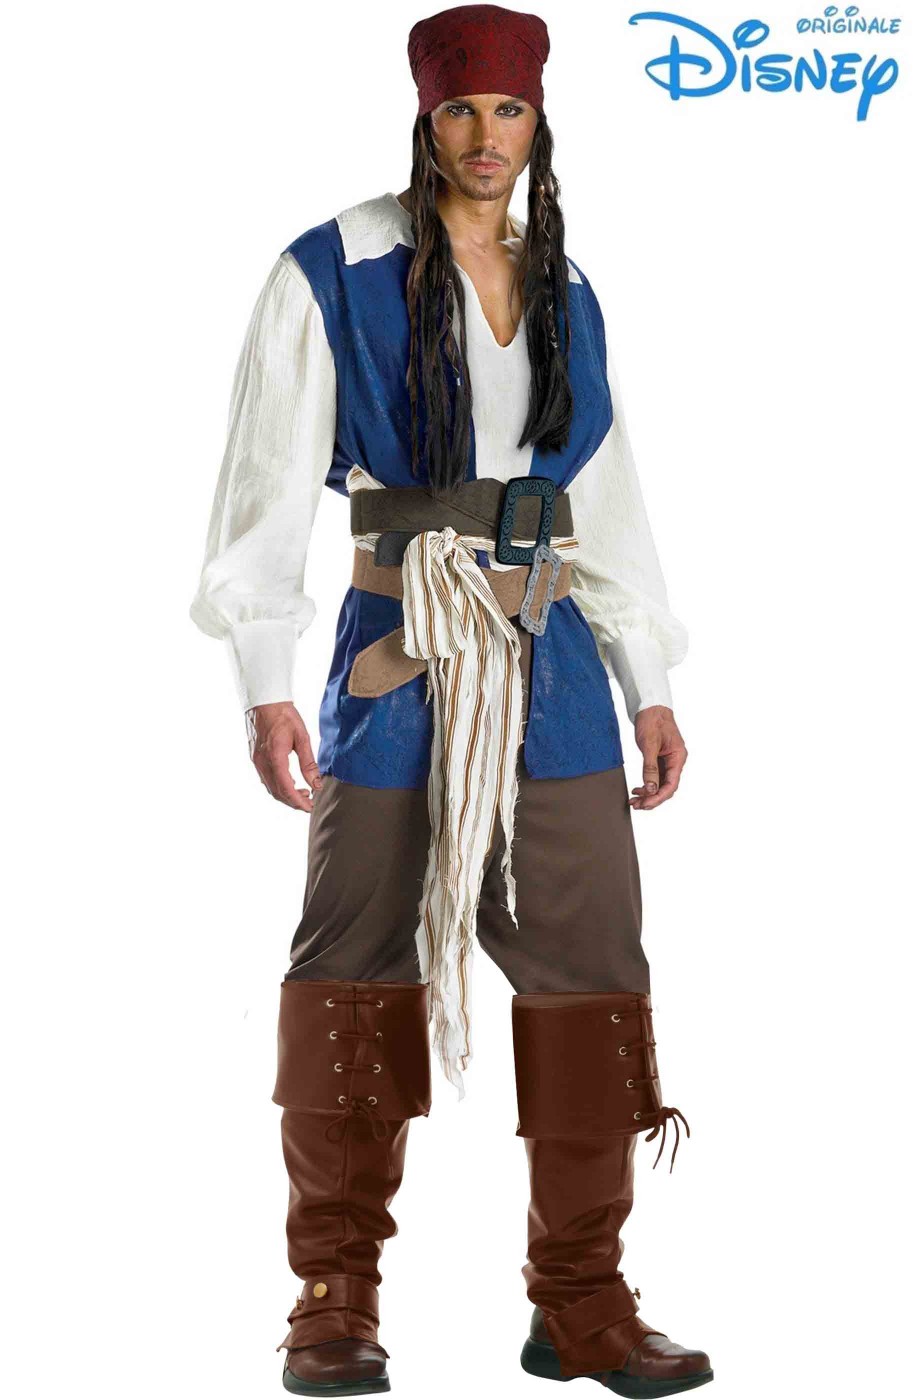 Costume Jack Sparrow dal film Pirati dei Caraibi